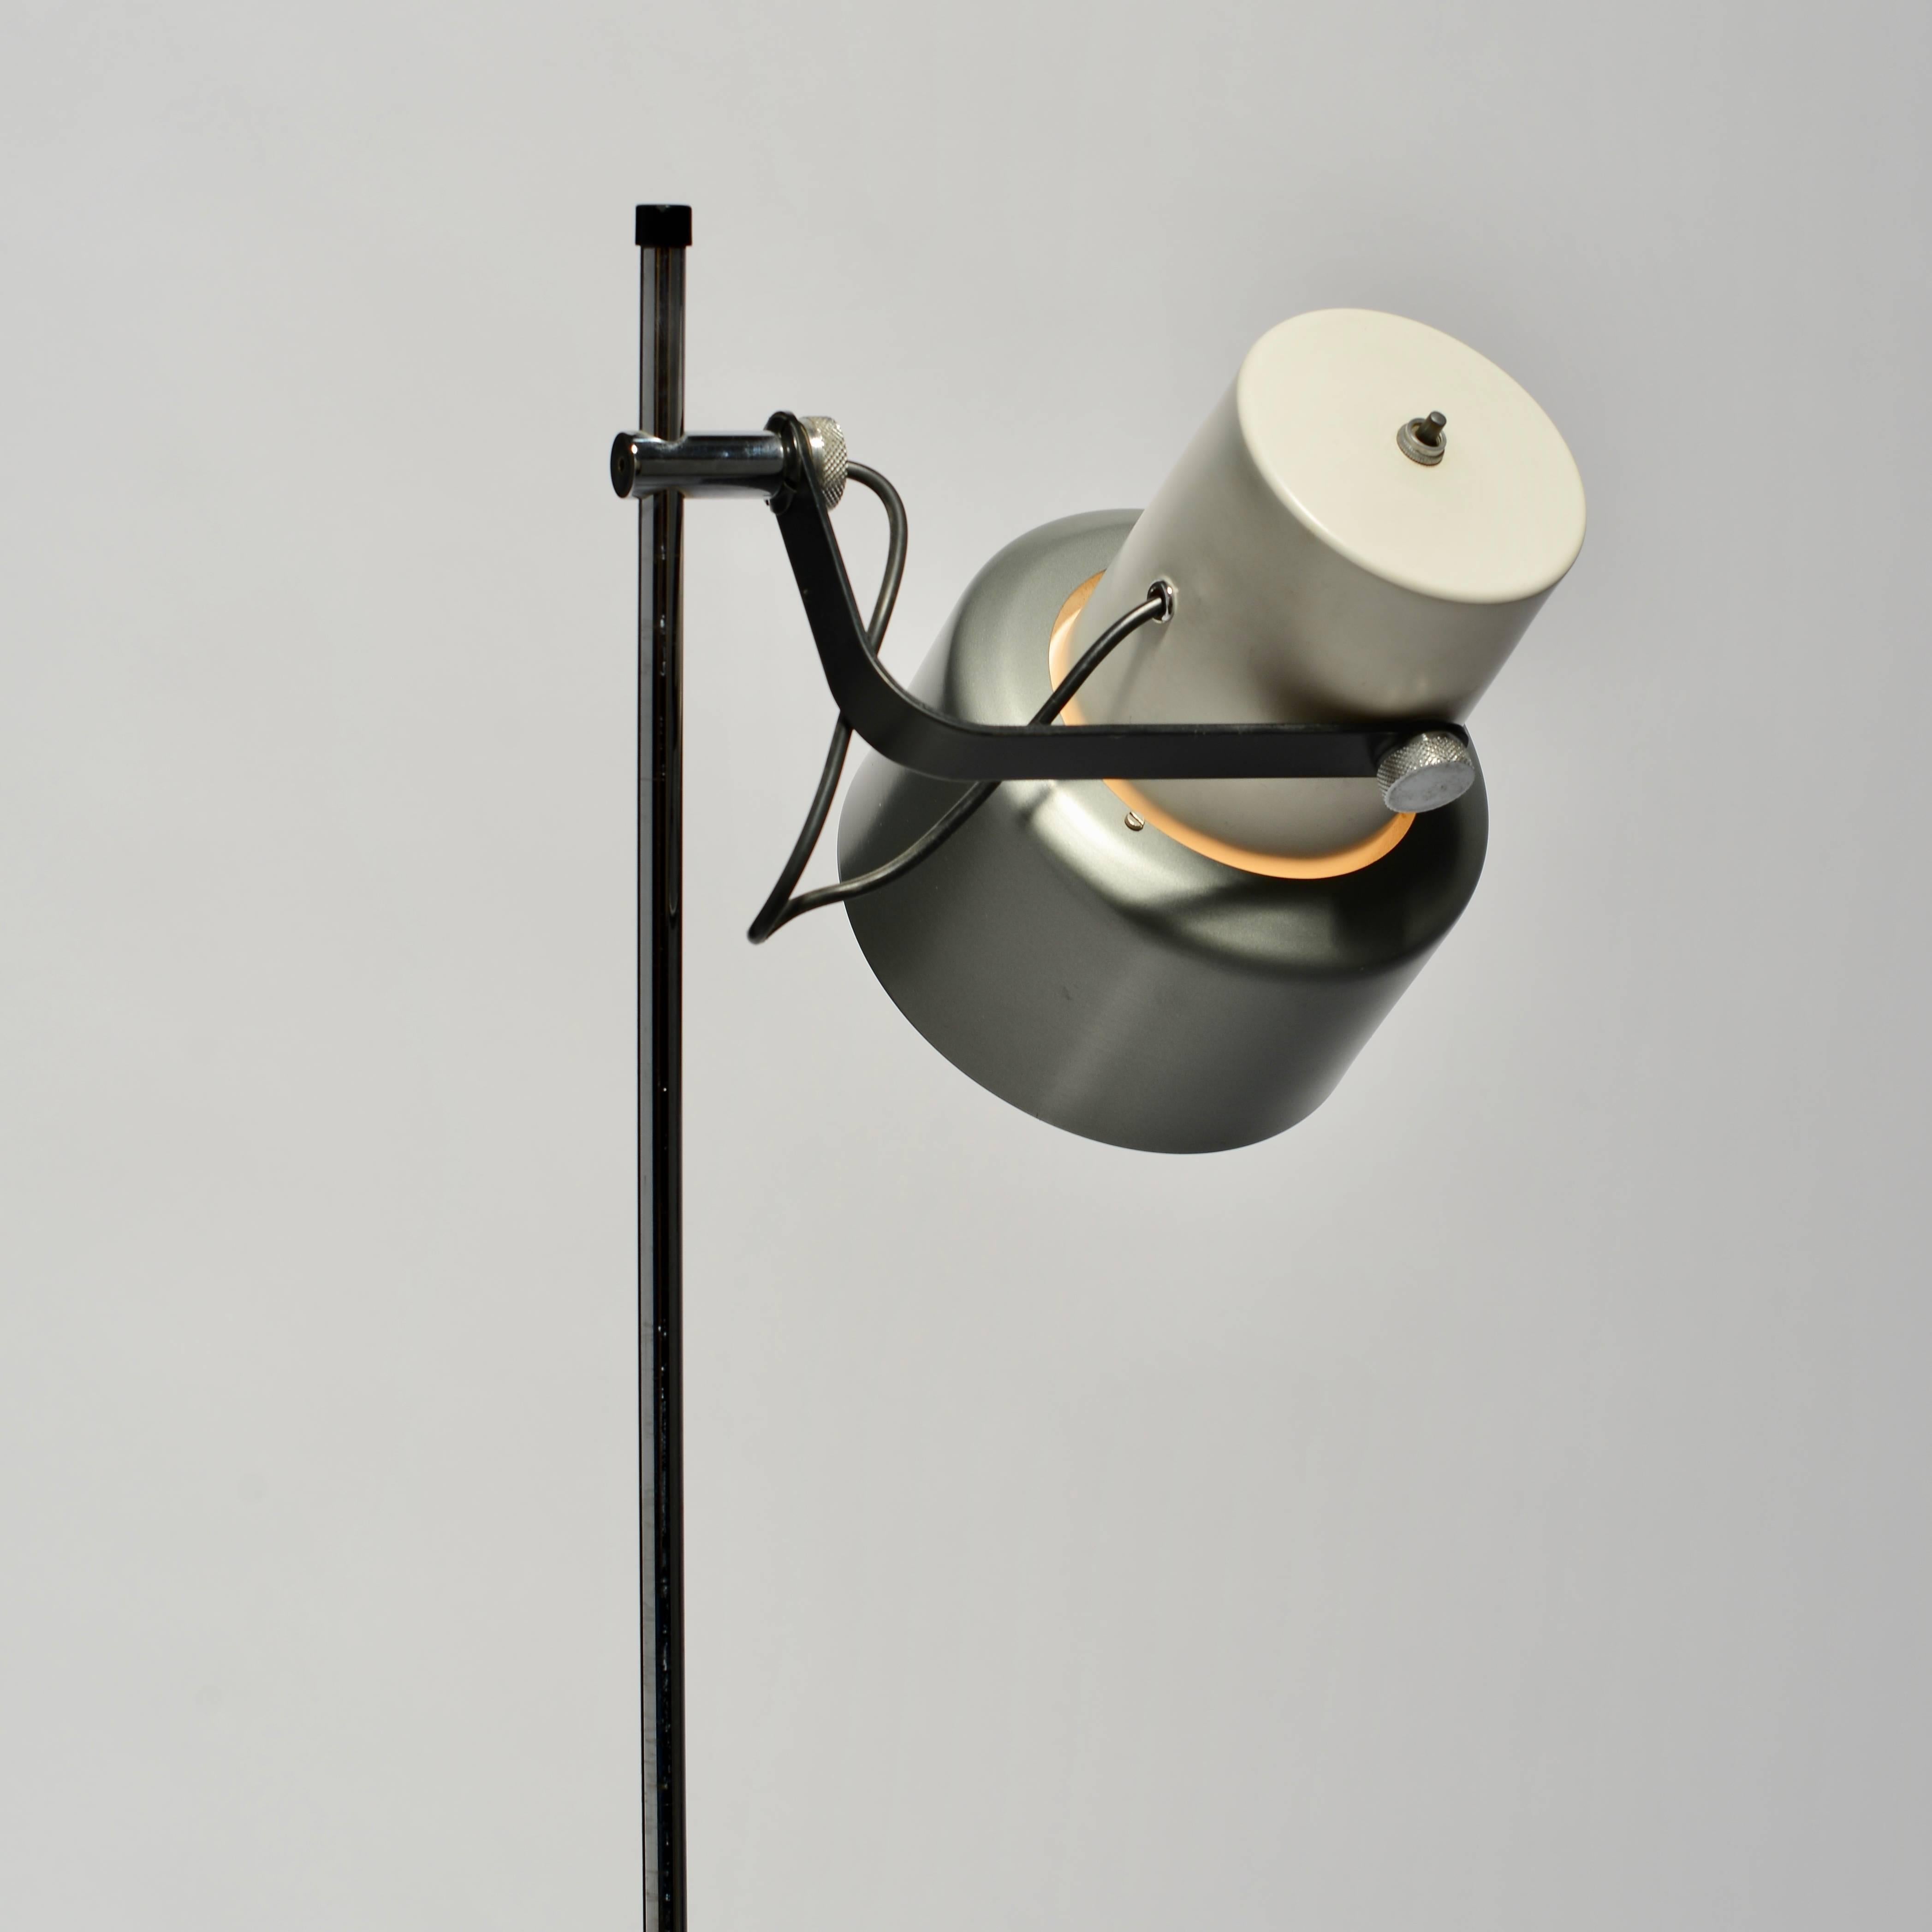 Mid-20th Century Italian Modern Adjustable Floor Lamp by Arredoluce